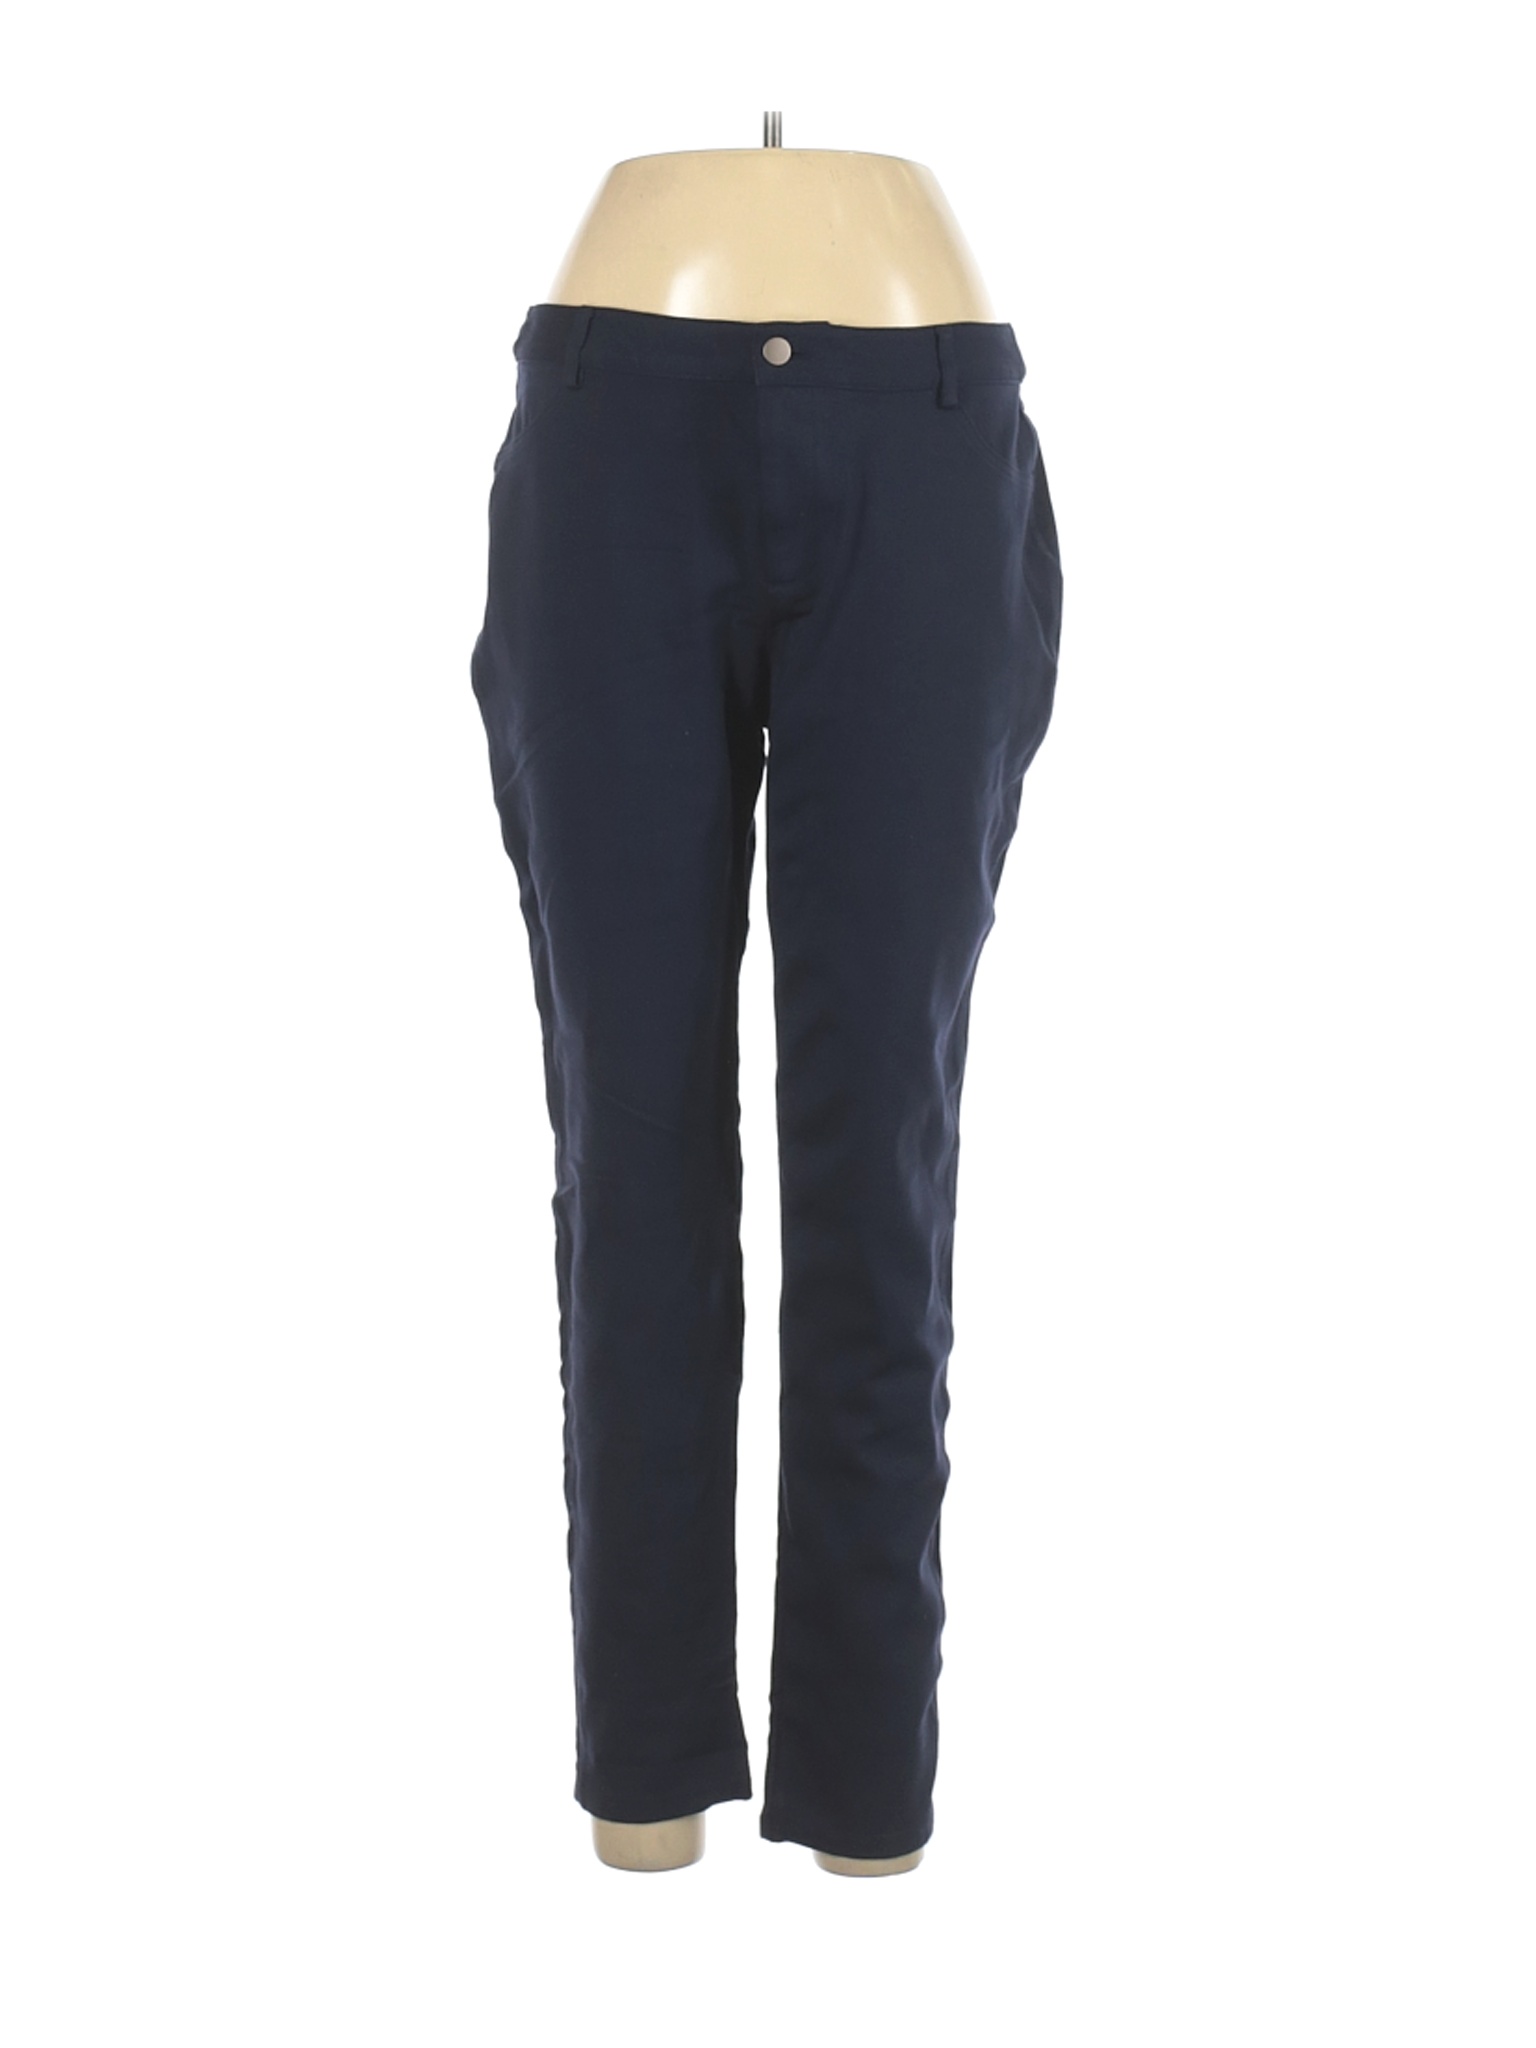 Crown & Ivy Women Blue Casual Pants 12 | eBay